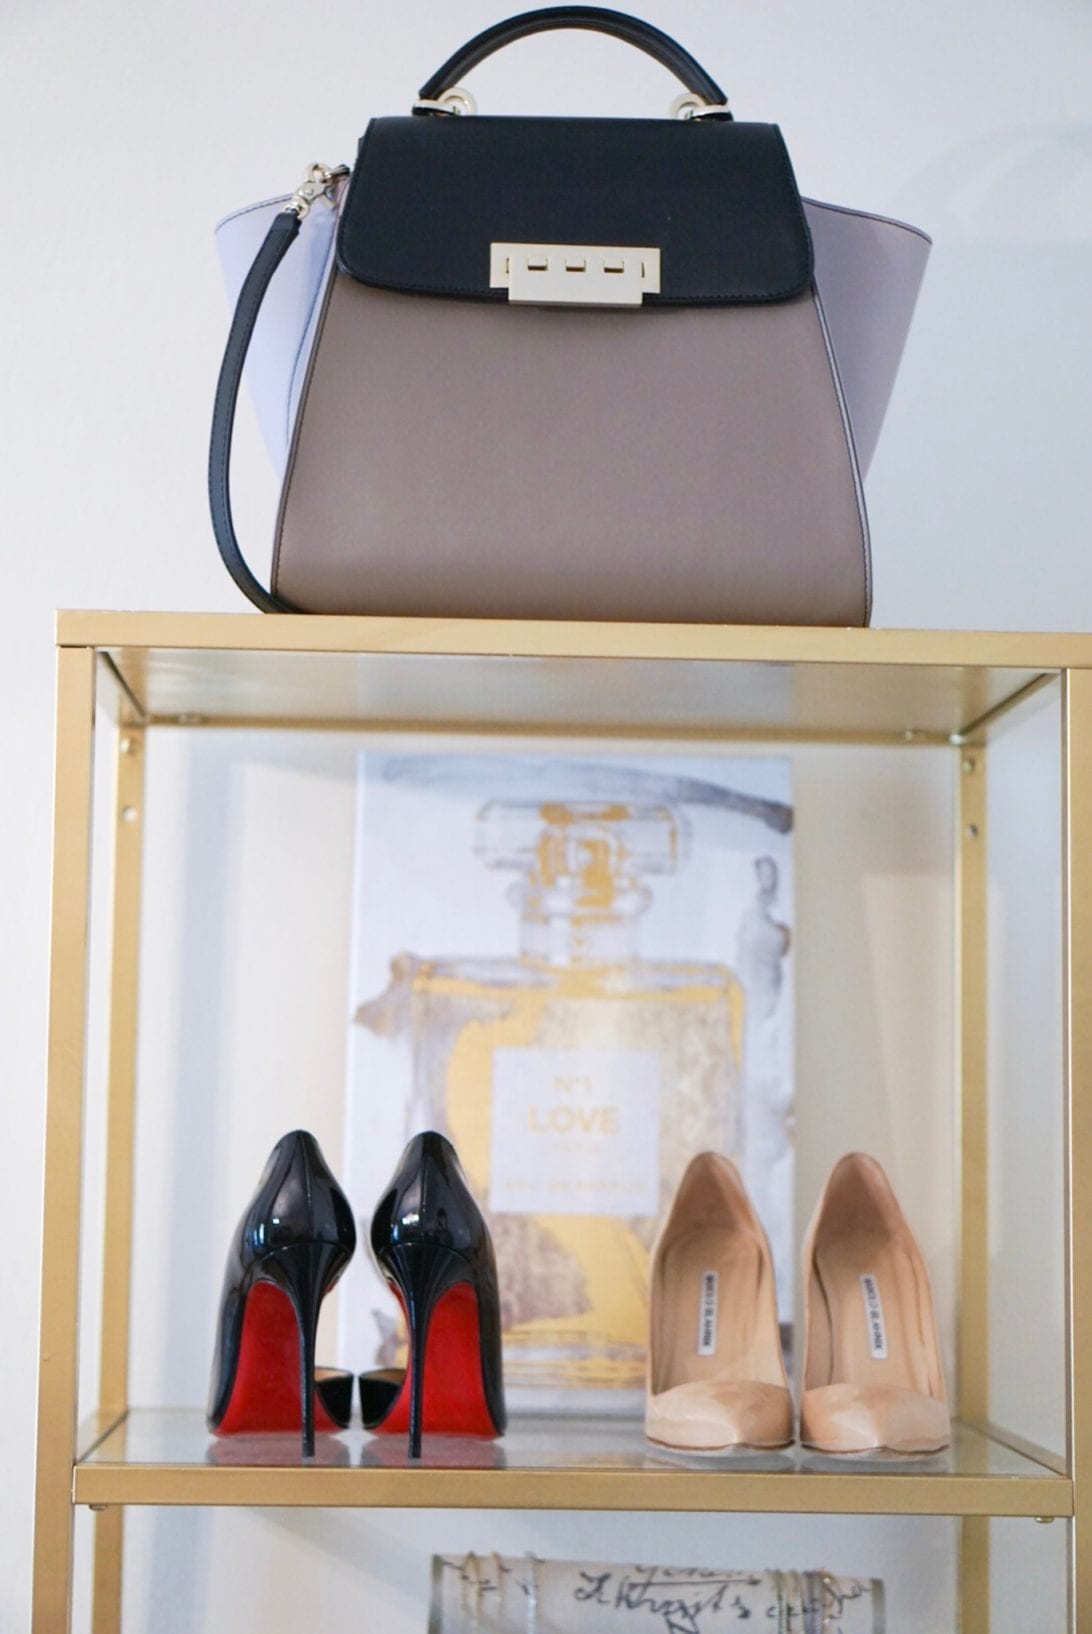 ZAC zac posen bag, christian louboutin shoes, manolo blanik, chanel, wall art, office, shoe display